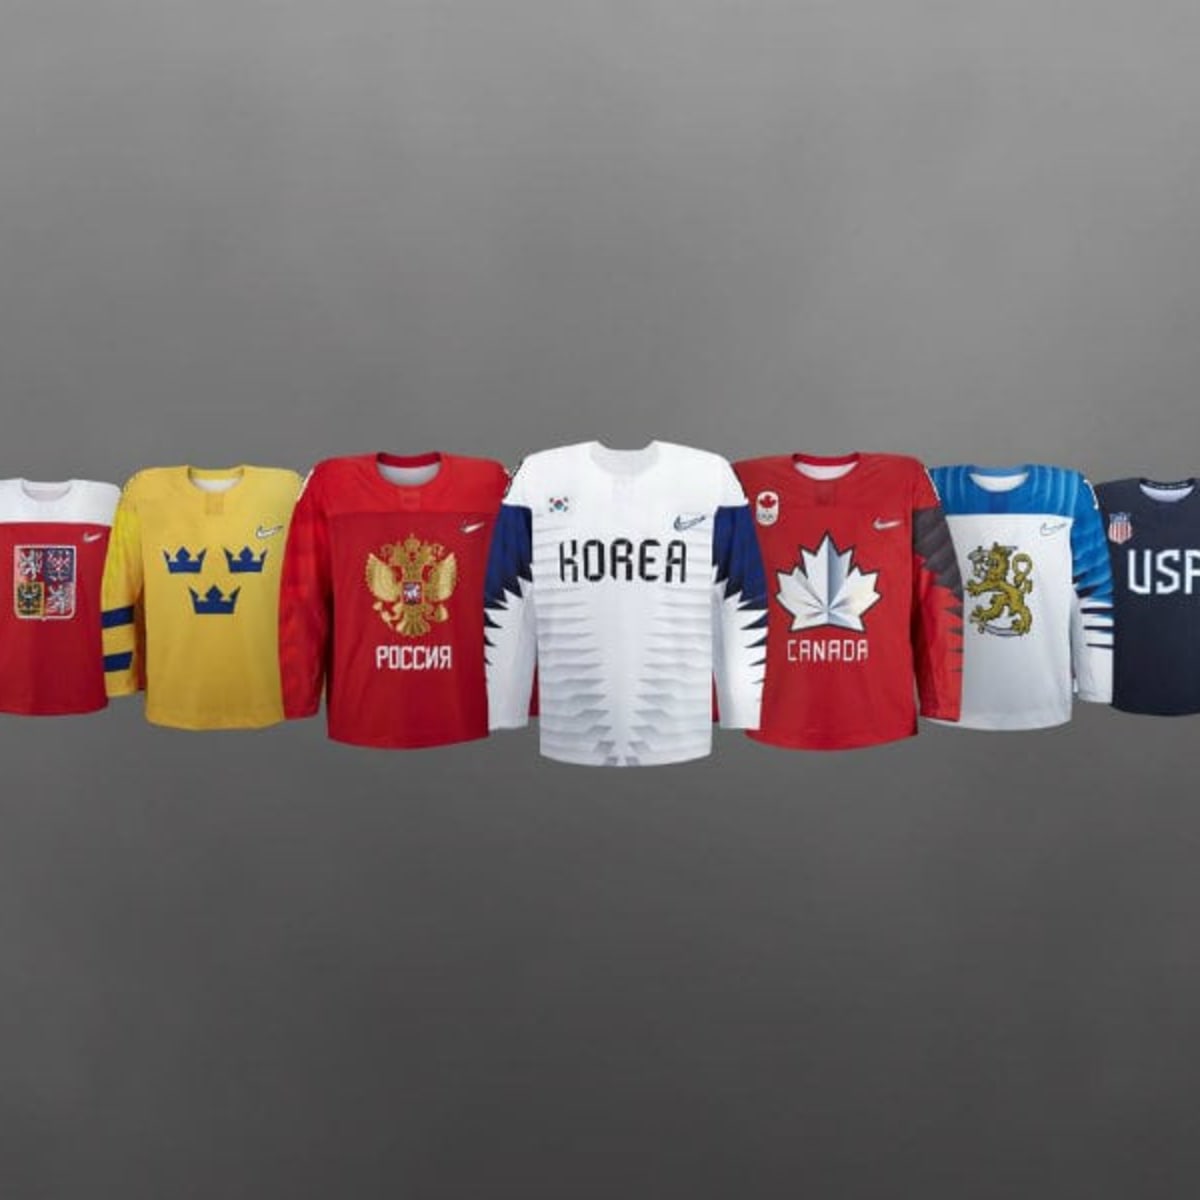 Team Canada Olympic hockey jerseys unveiled